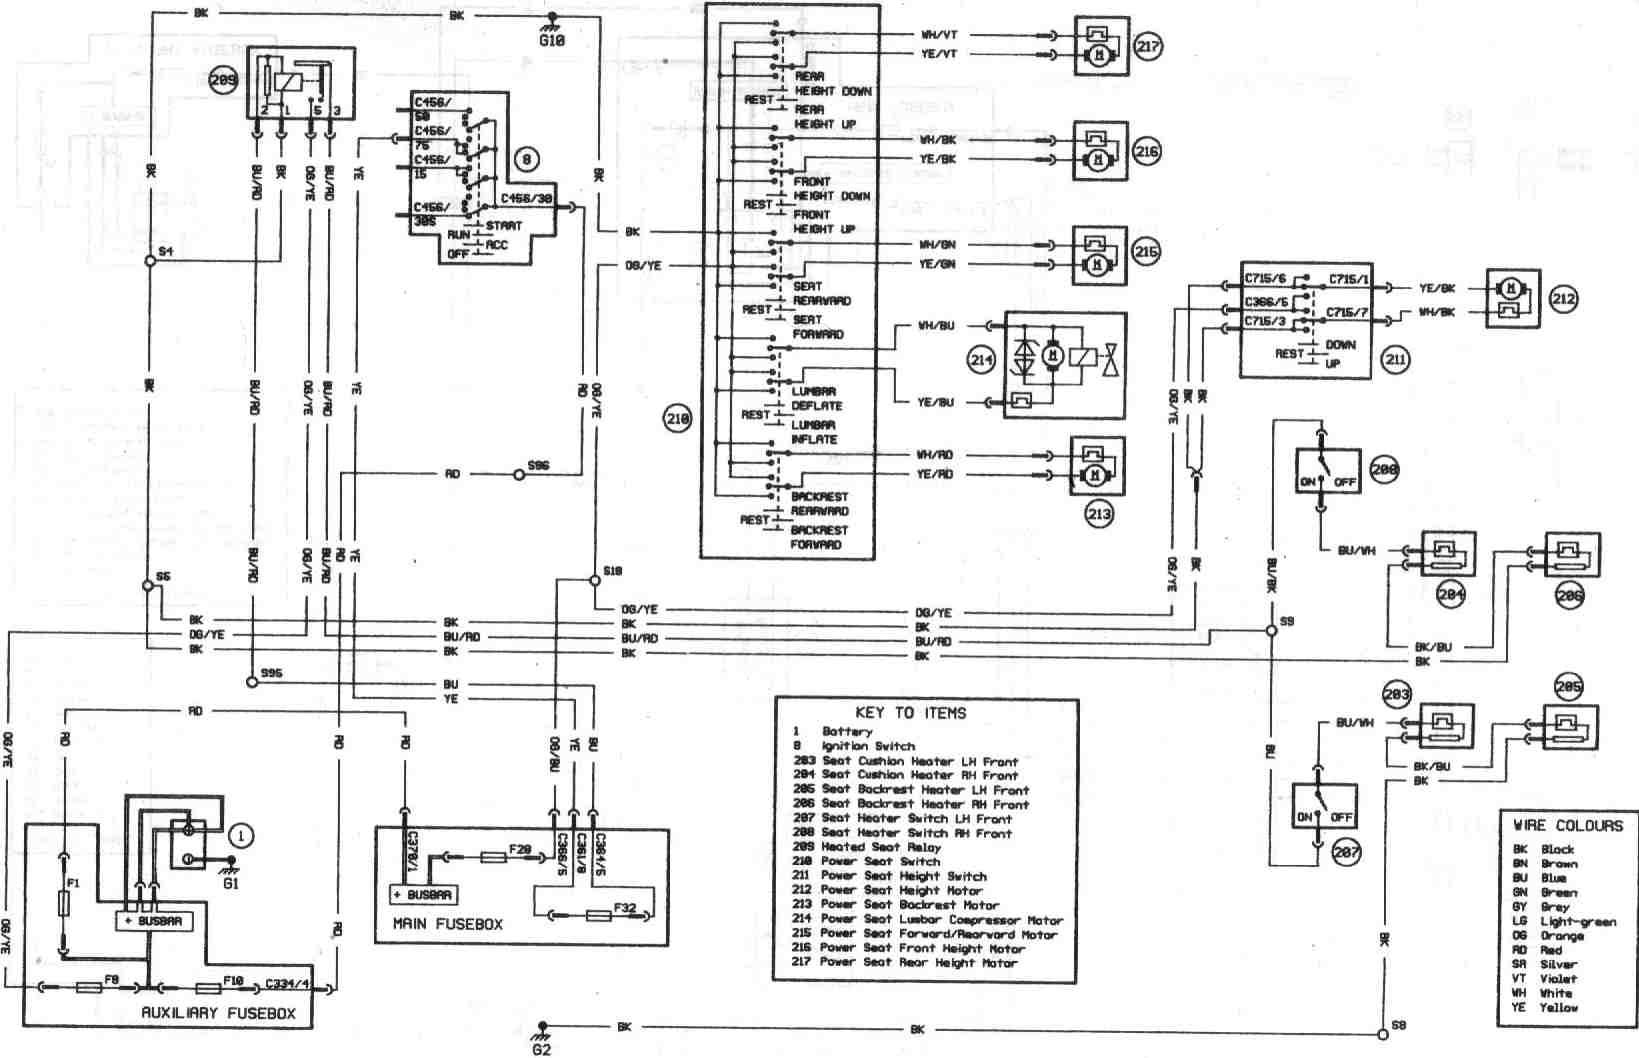 Ford mondeo mk3 radio wiring diagram #4